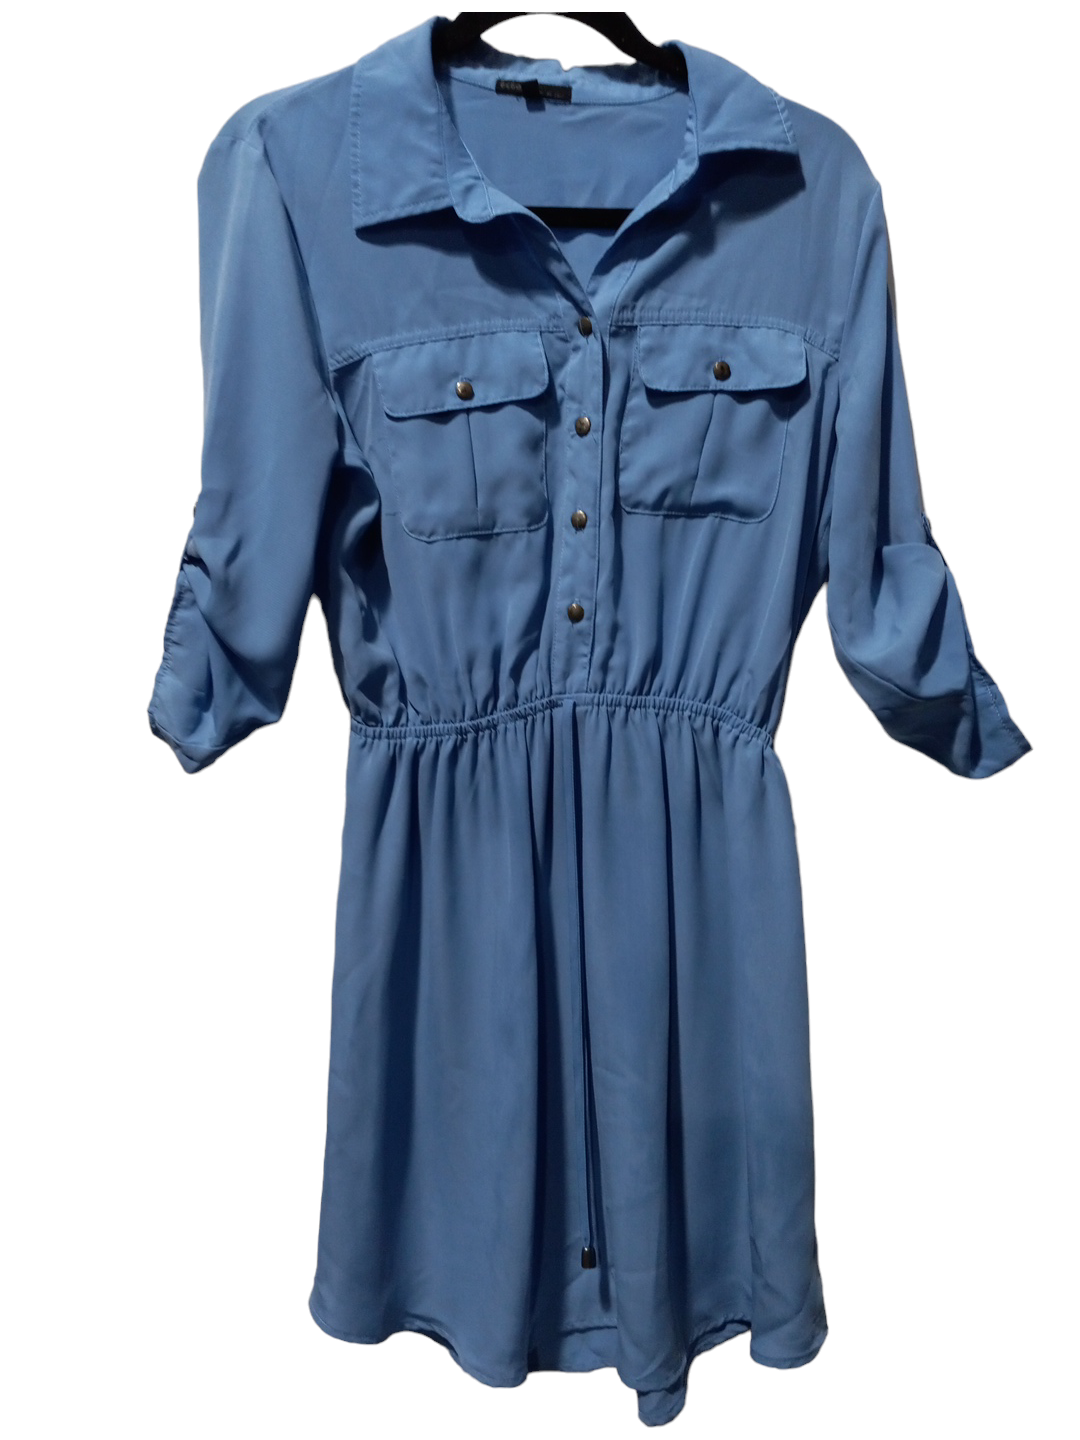 Blue Dress Casual Short Be-bop, Size M